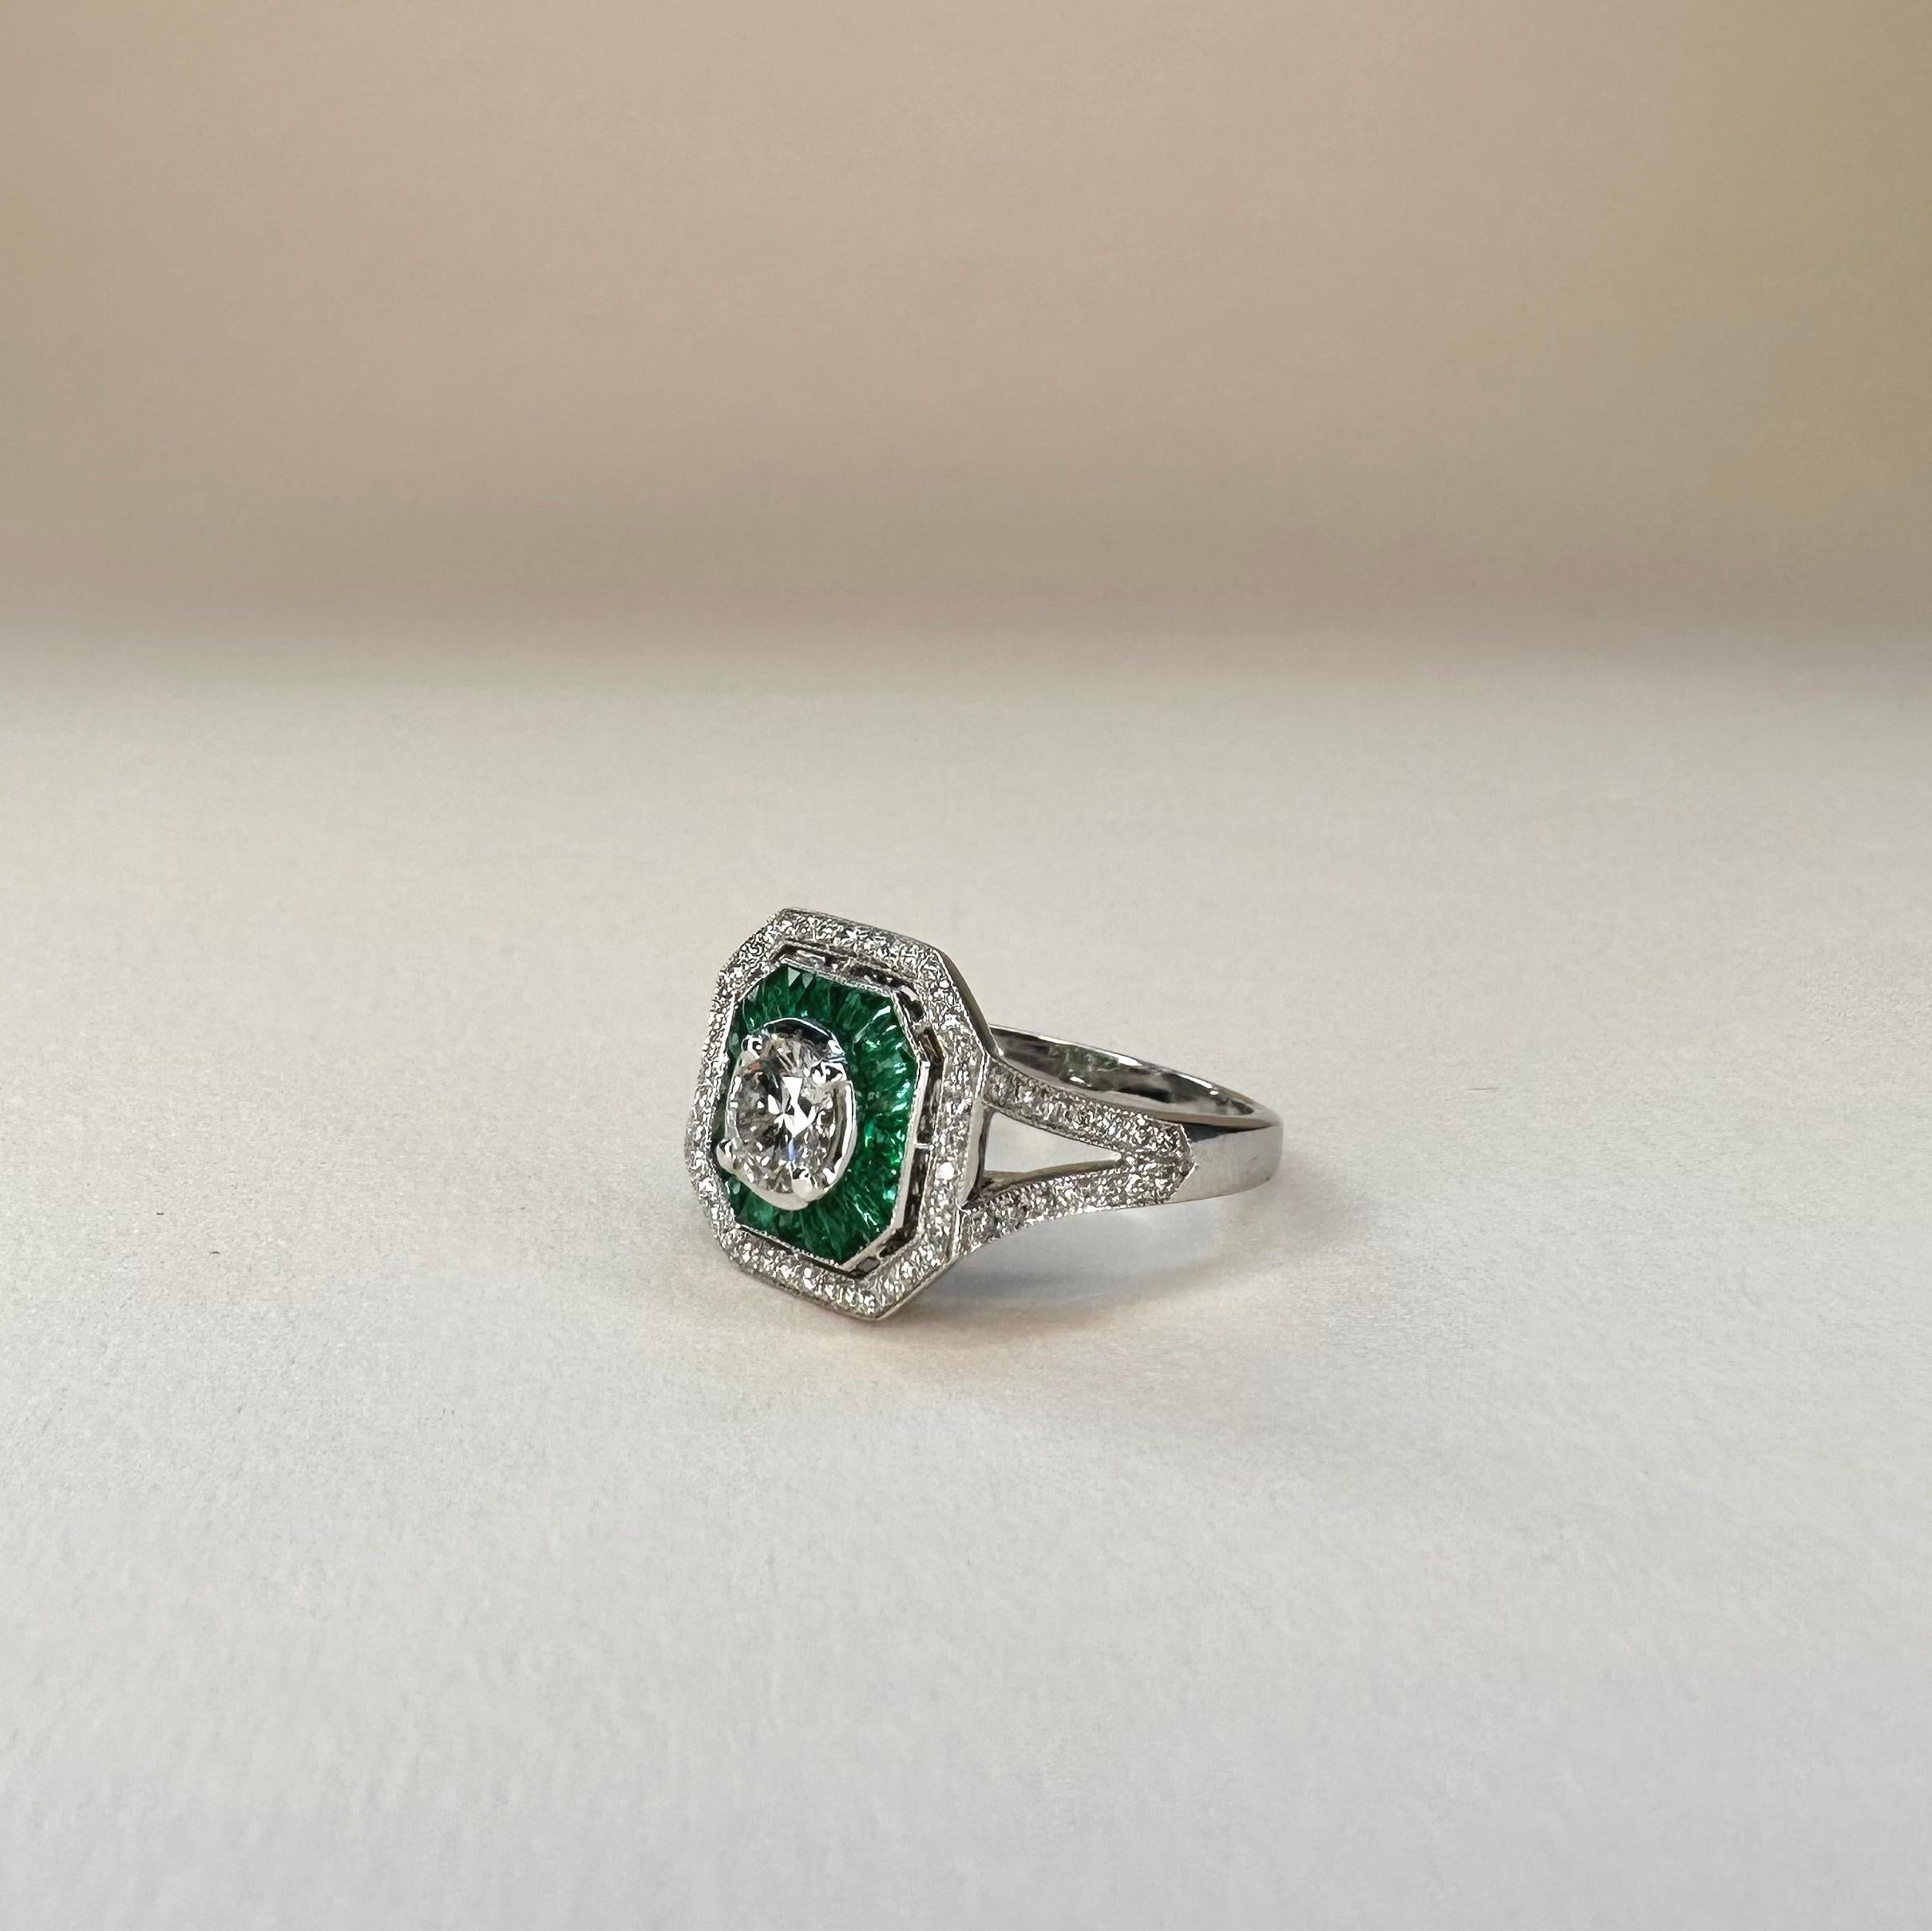 For Sale:  Platinum 0.30 Ct Vivid Green Calibre Cut Emerald with center 0.4 Ct Diamond Ring 6